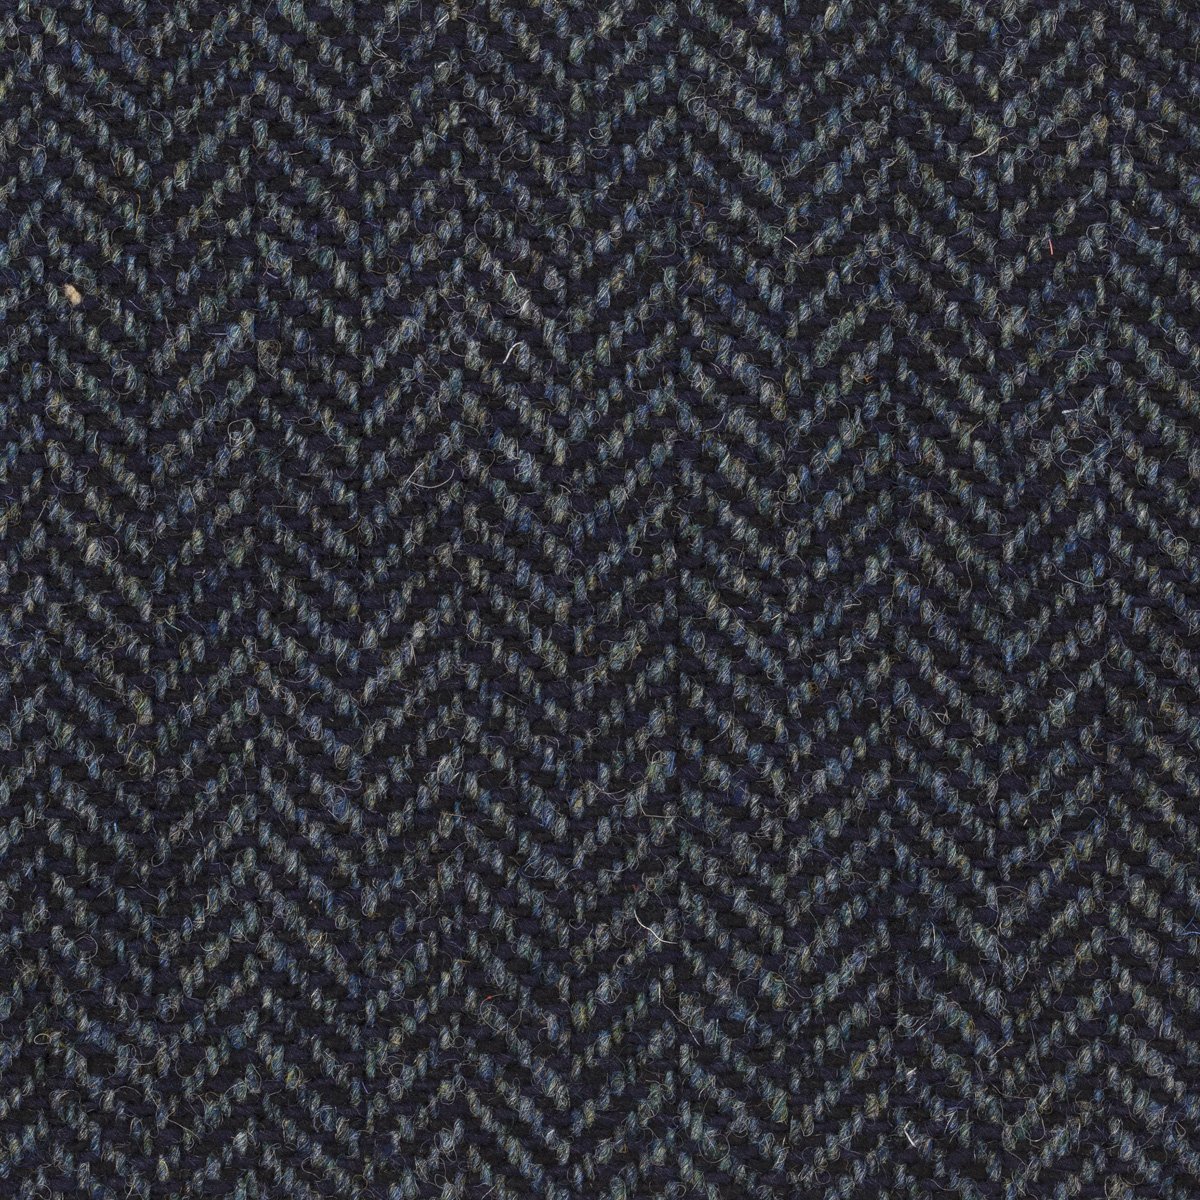 J.FitzPatrick Footwear Blue Tweed Fabric